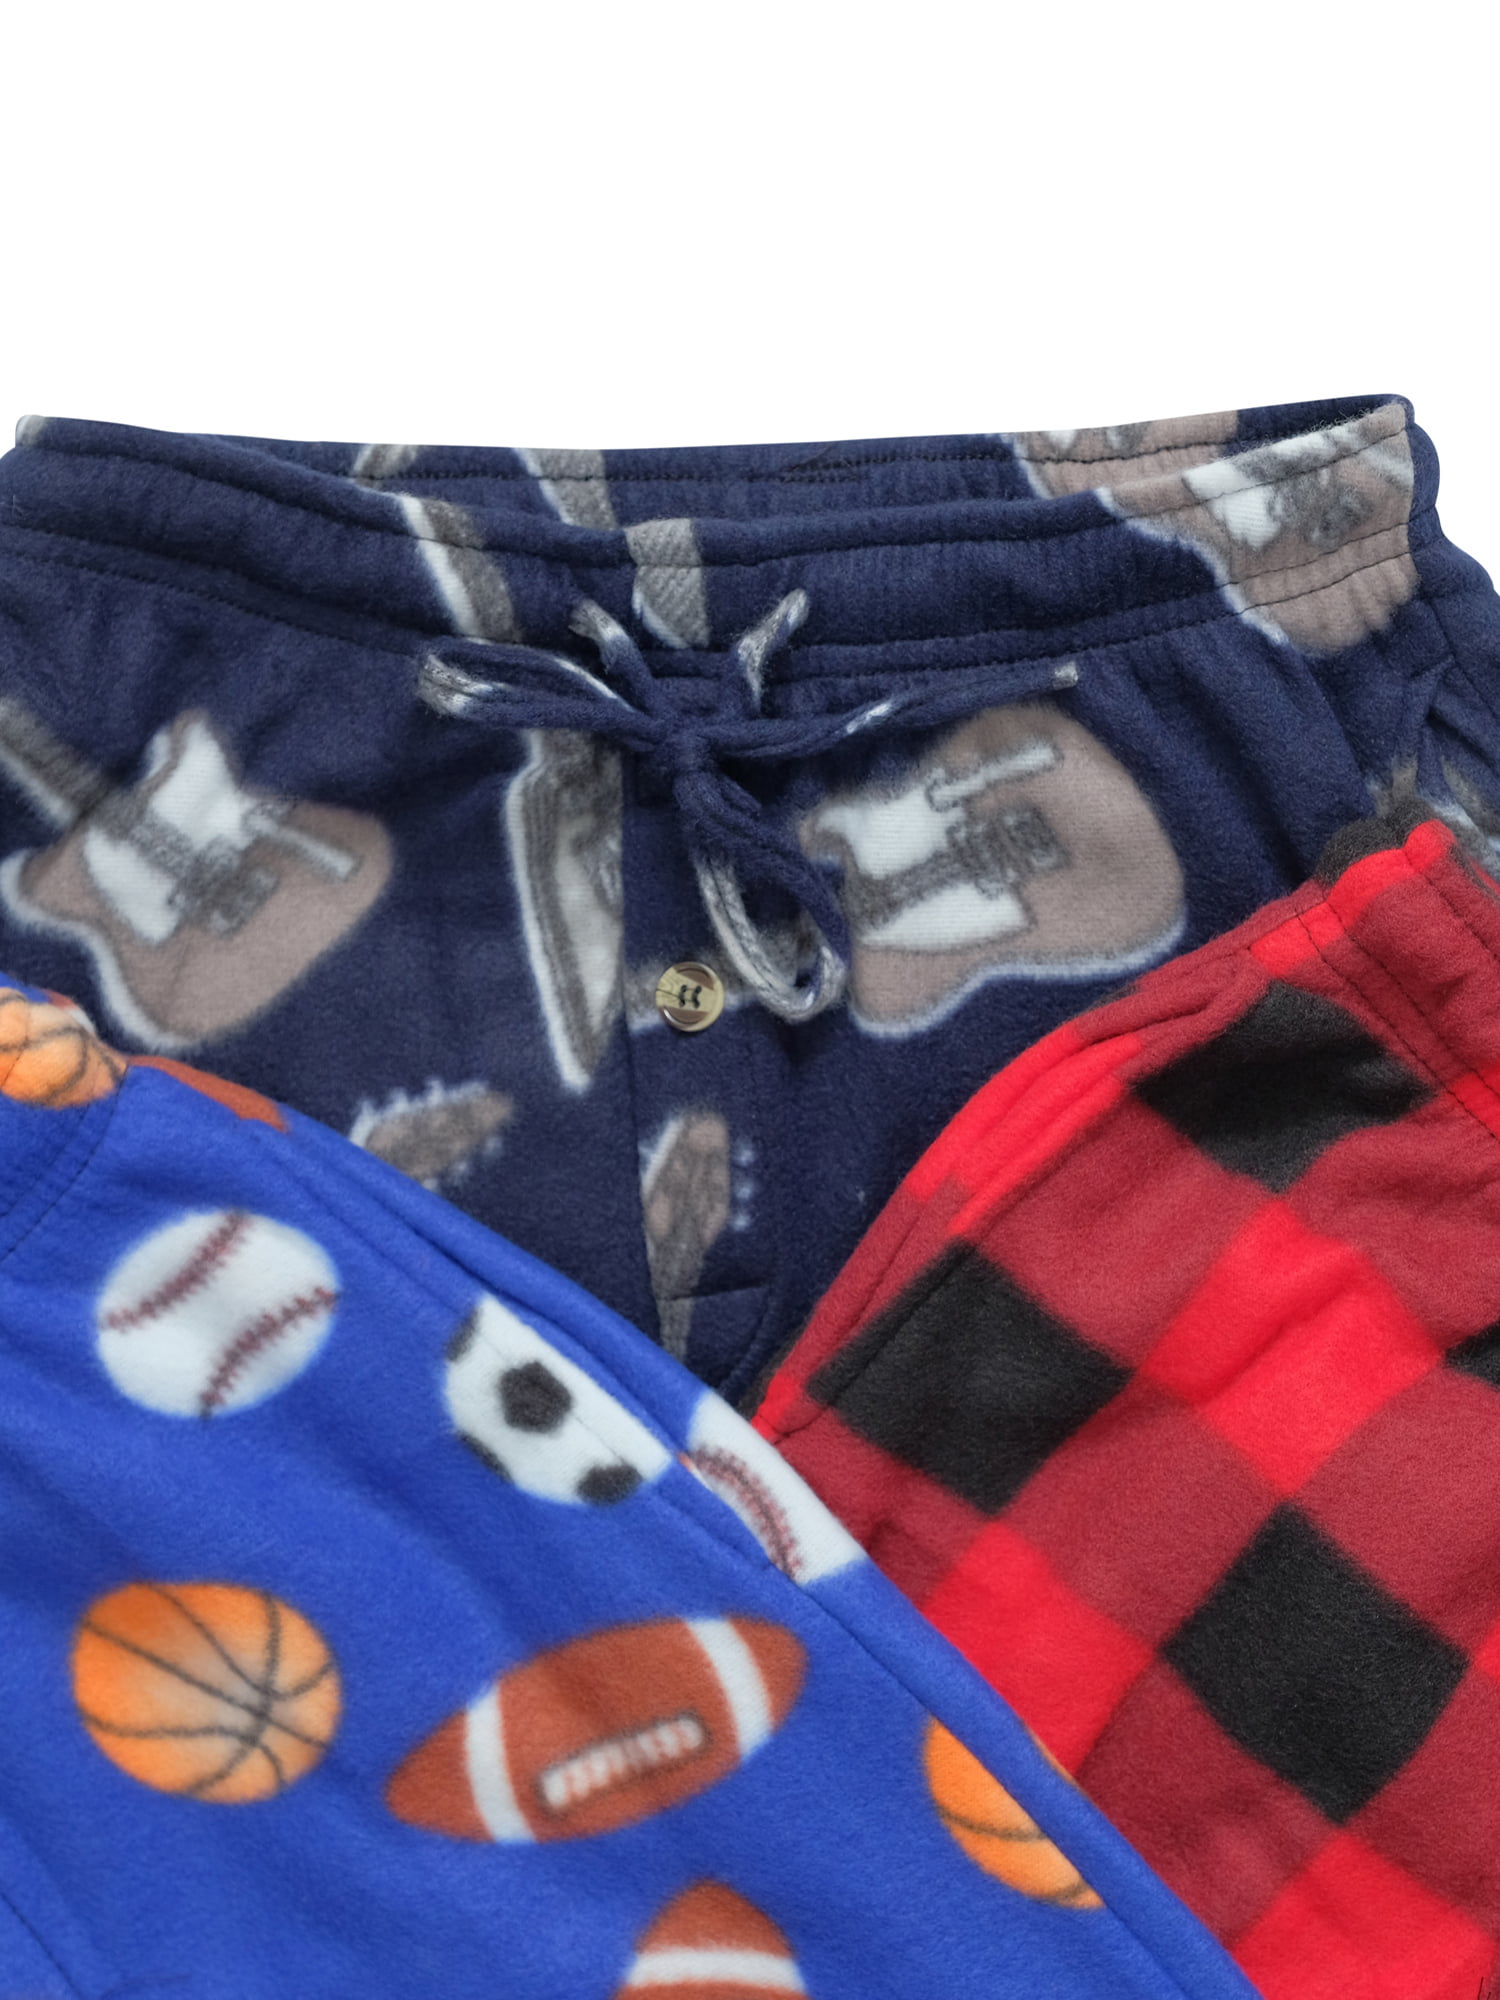 Real Essentials 3 Pack Boys Pajama Pants Super Soft Fleece PJ Lounge Bottoms for Kids 